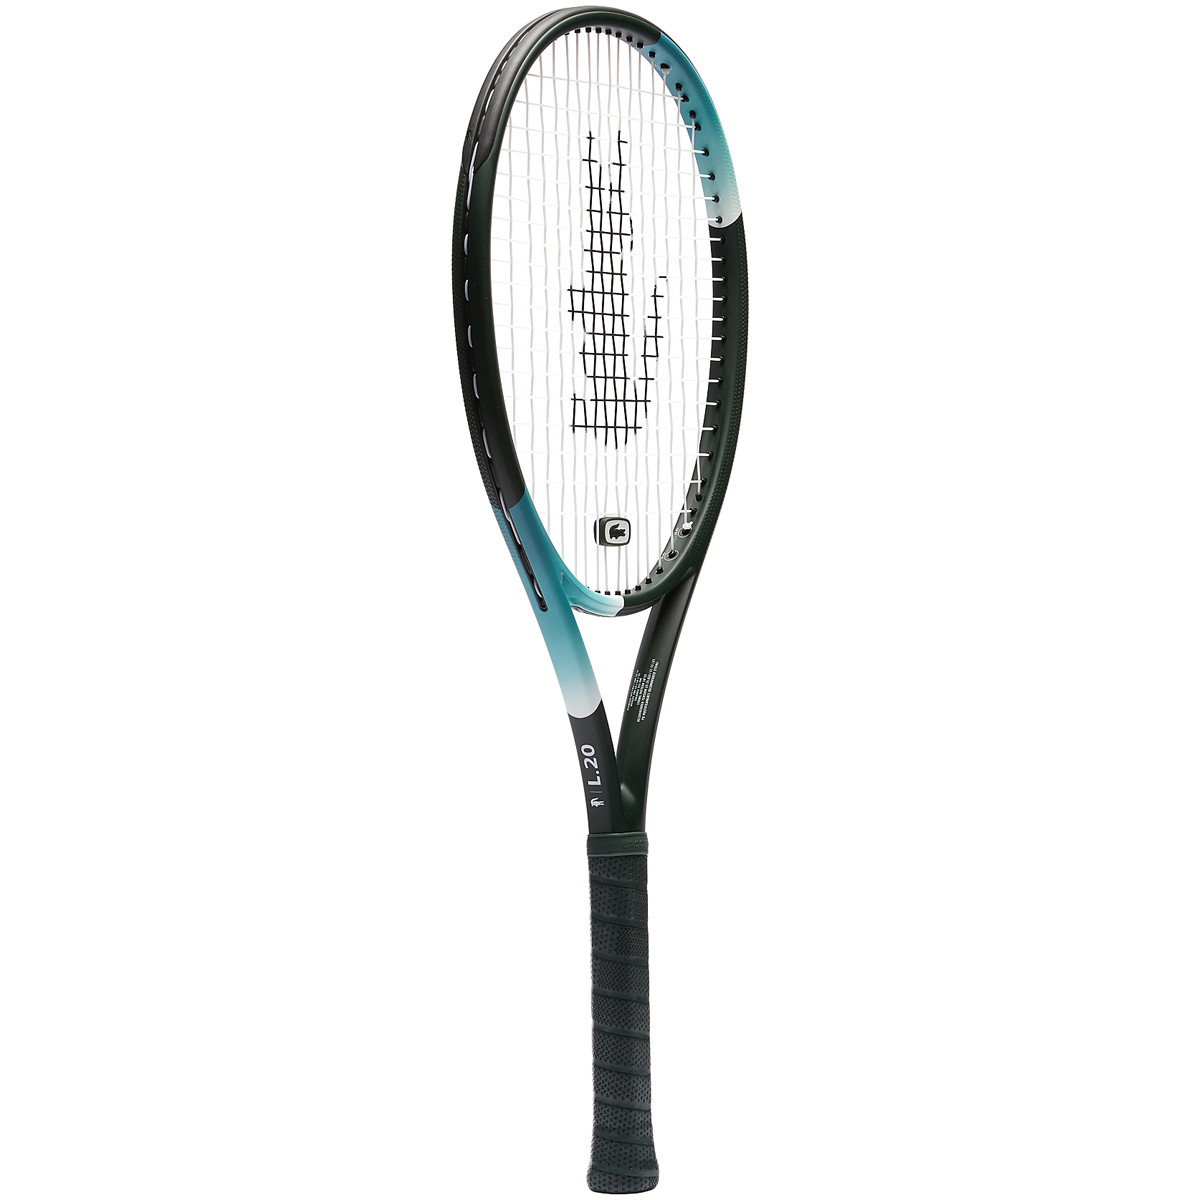 Raqueta de tenis Lacoste L20 290 gr